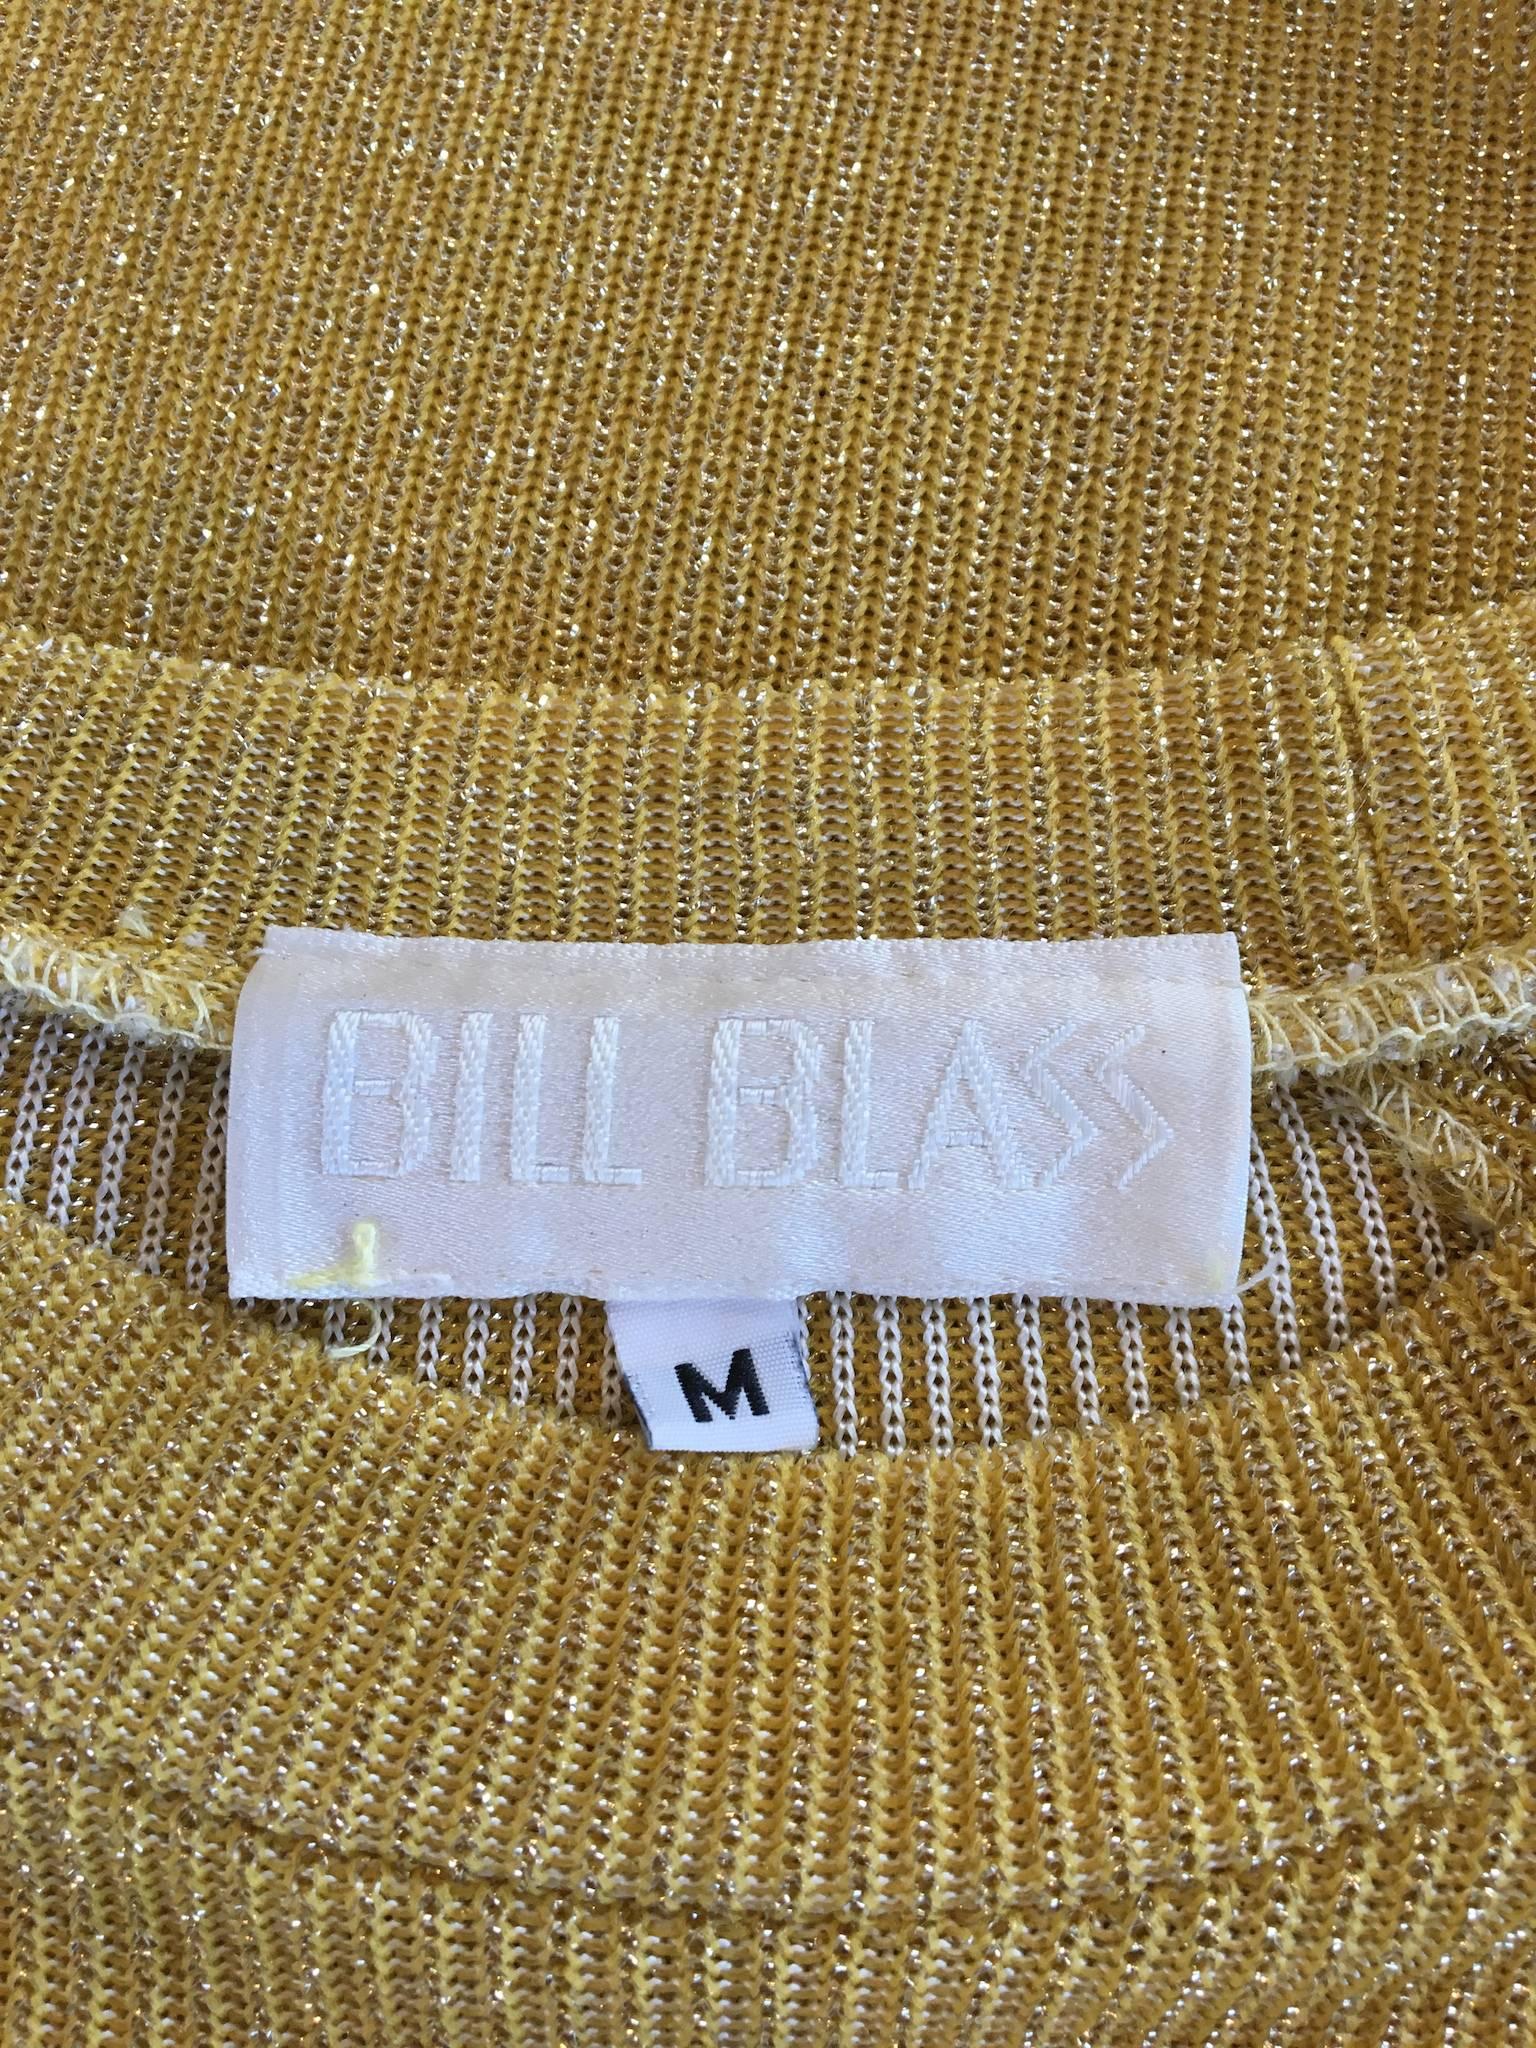 Women's Bill blass Vintage 1970s Metallic Gold Maxi Ribbed Knit Dress 